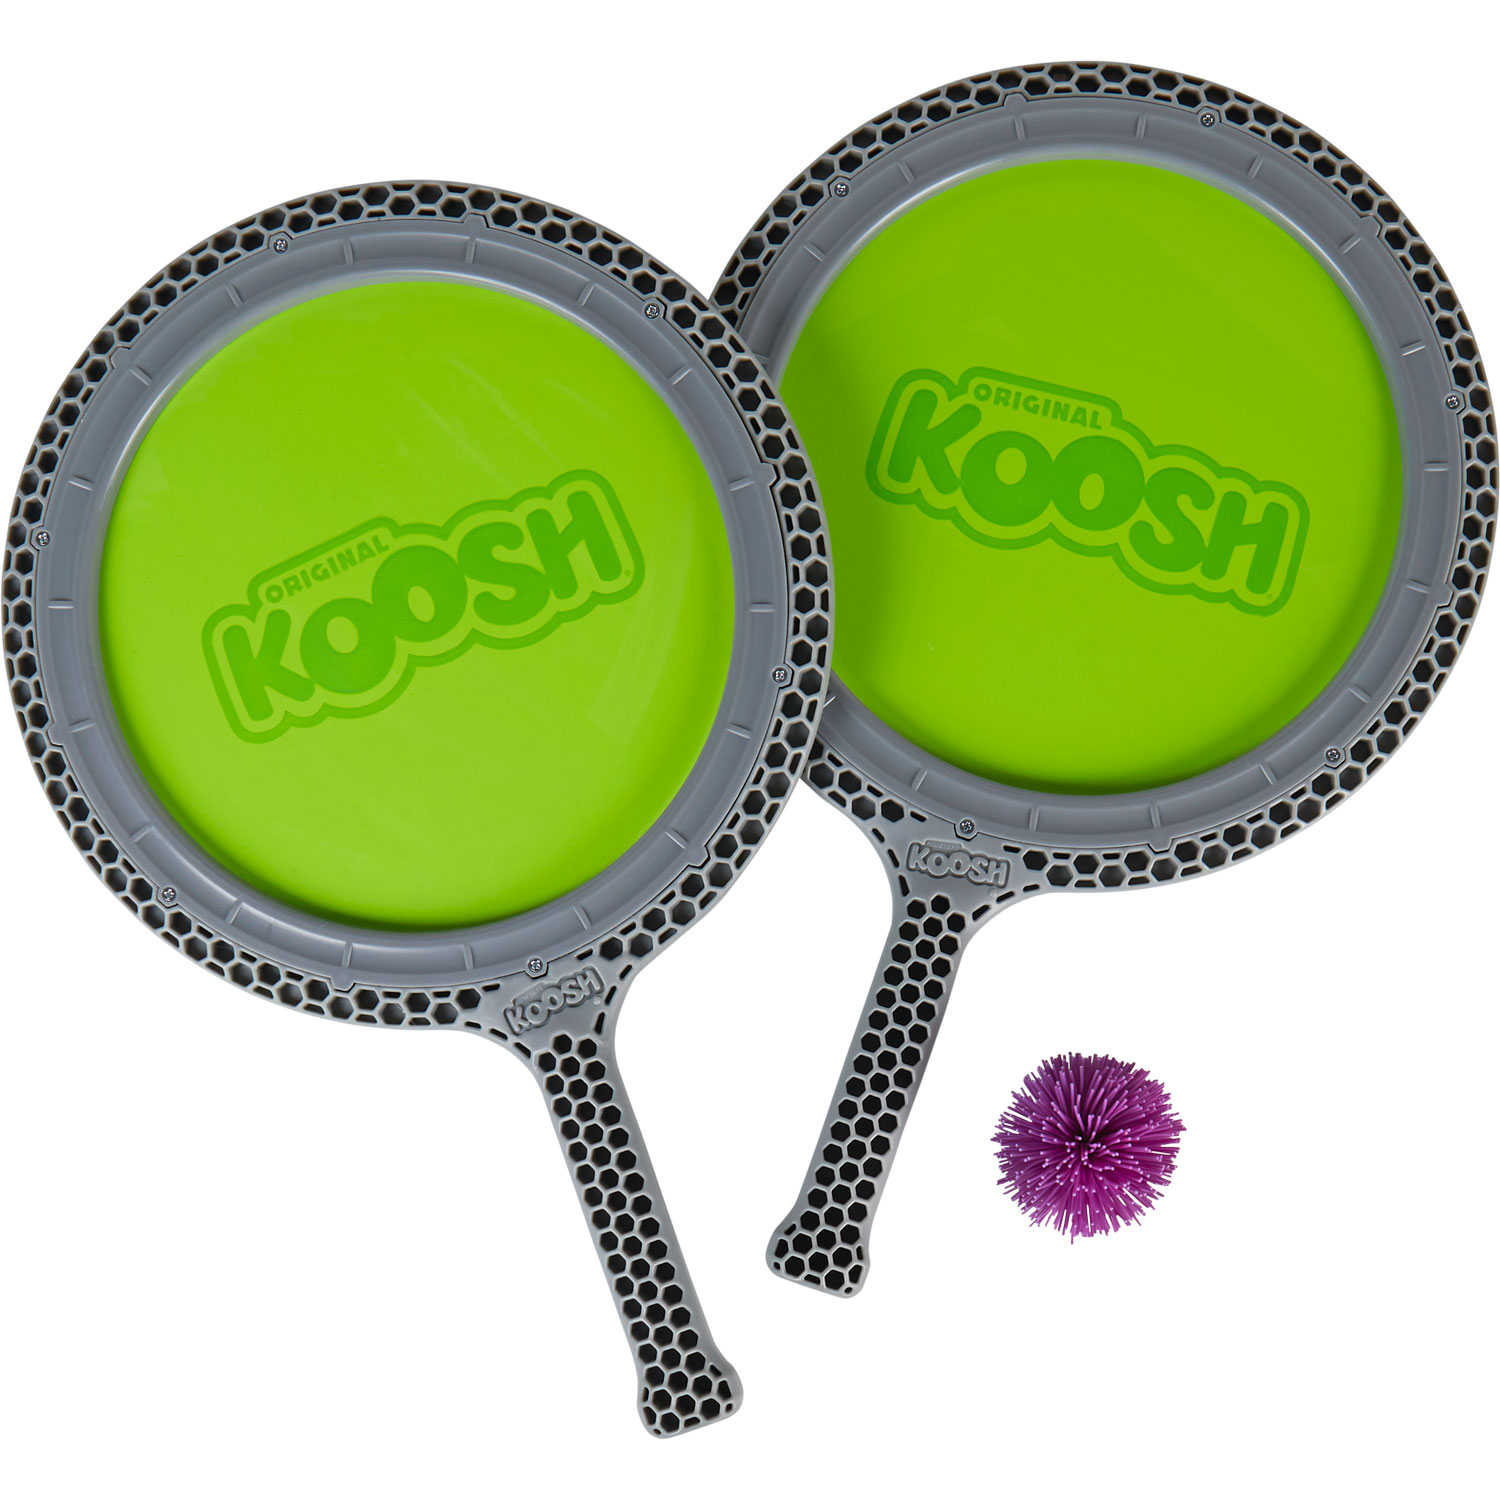 Koosh Double Paddle : Target